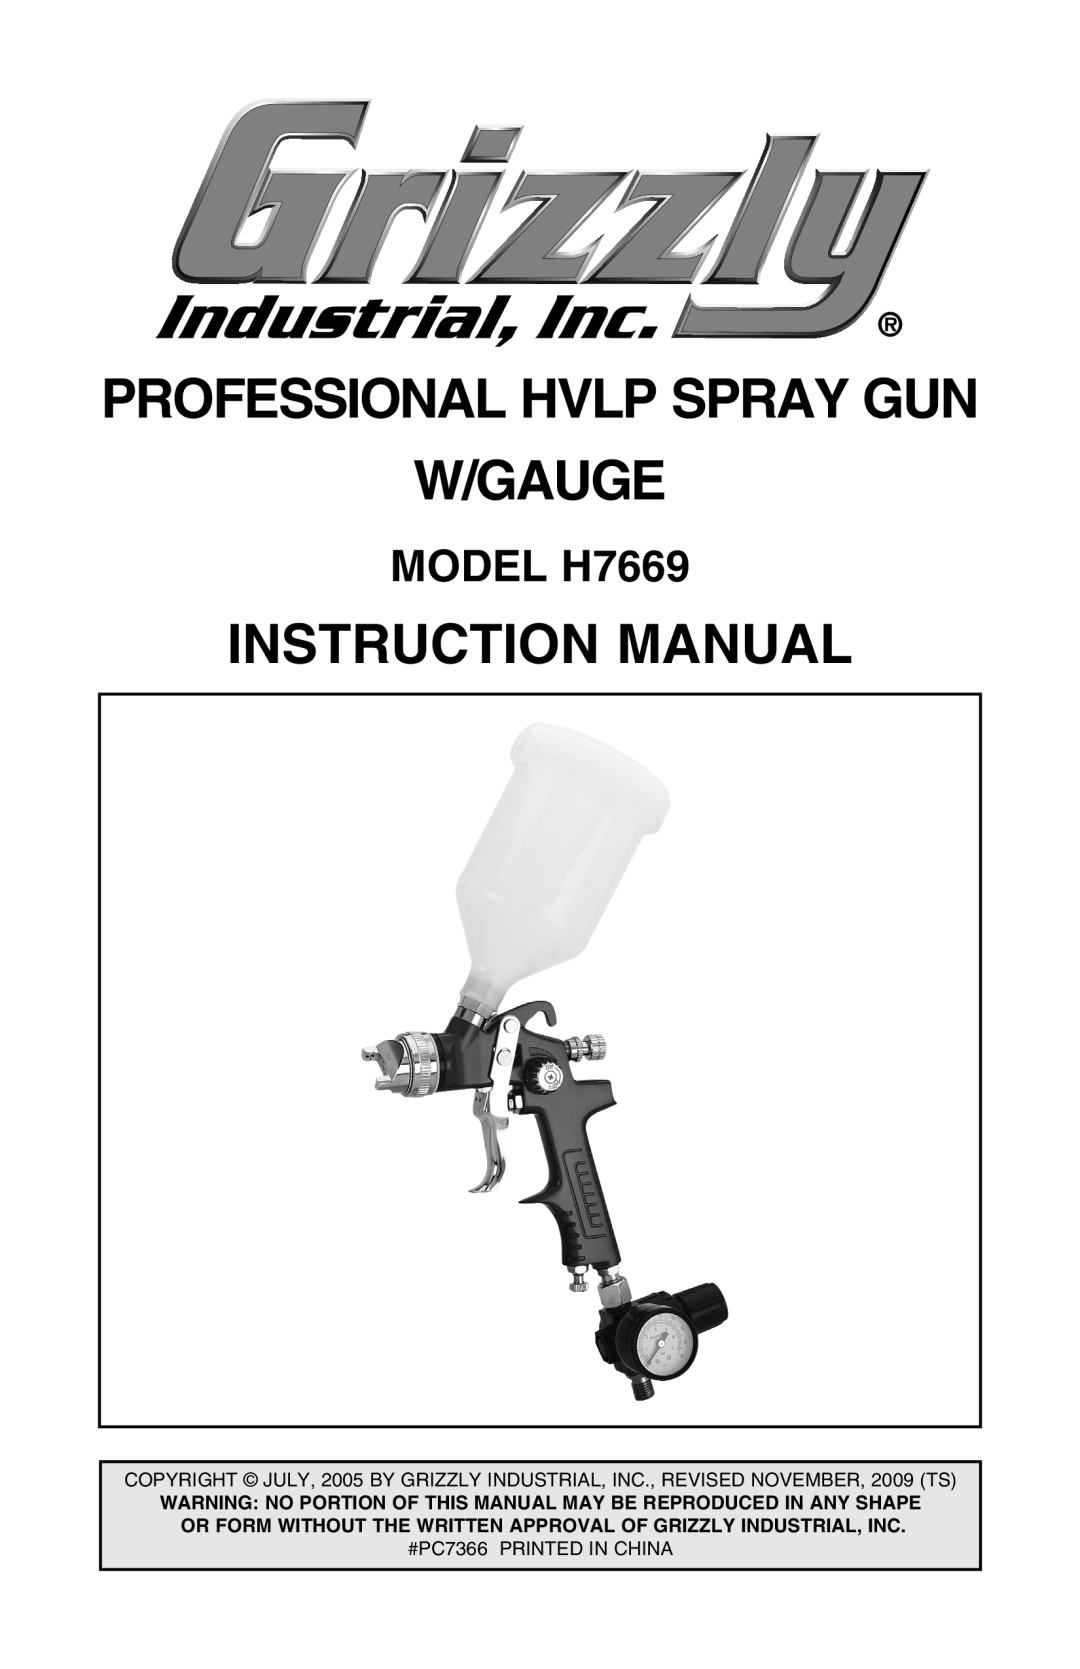 Grizzly instruction manual Professional Hvlp Spray Gun, W/Gauge, MODEL H7669 